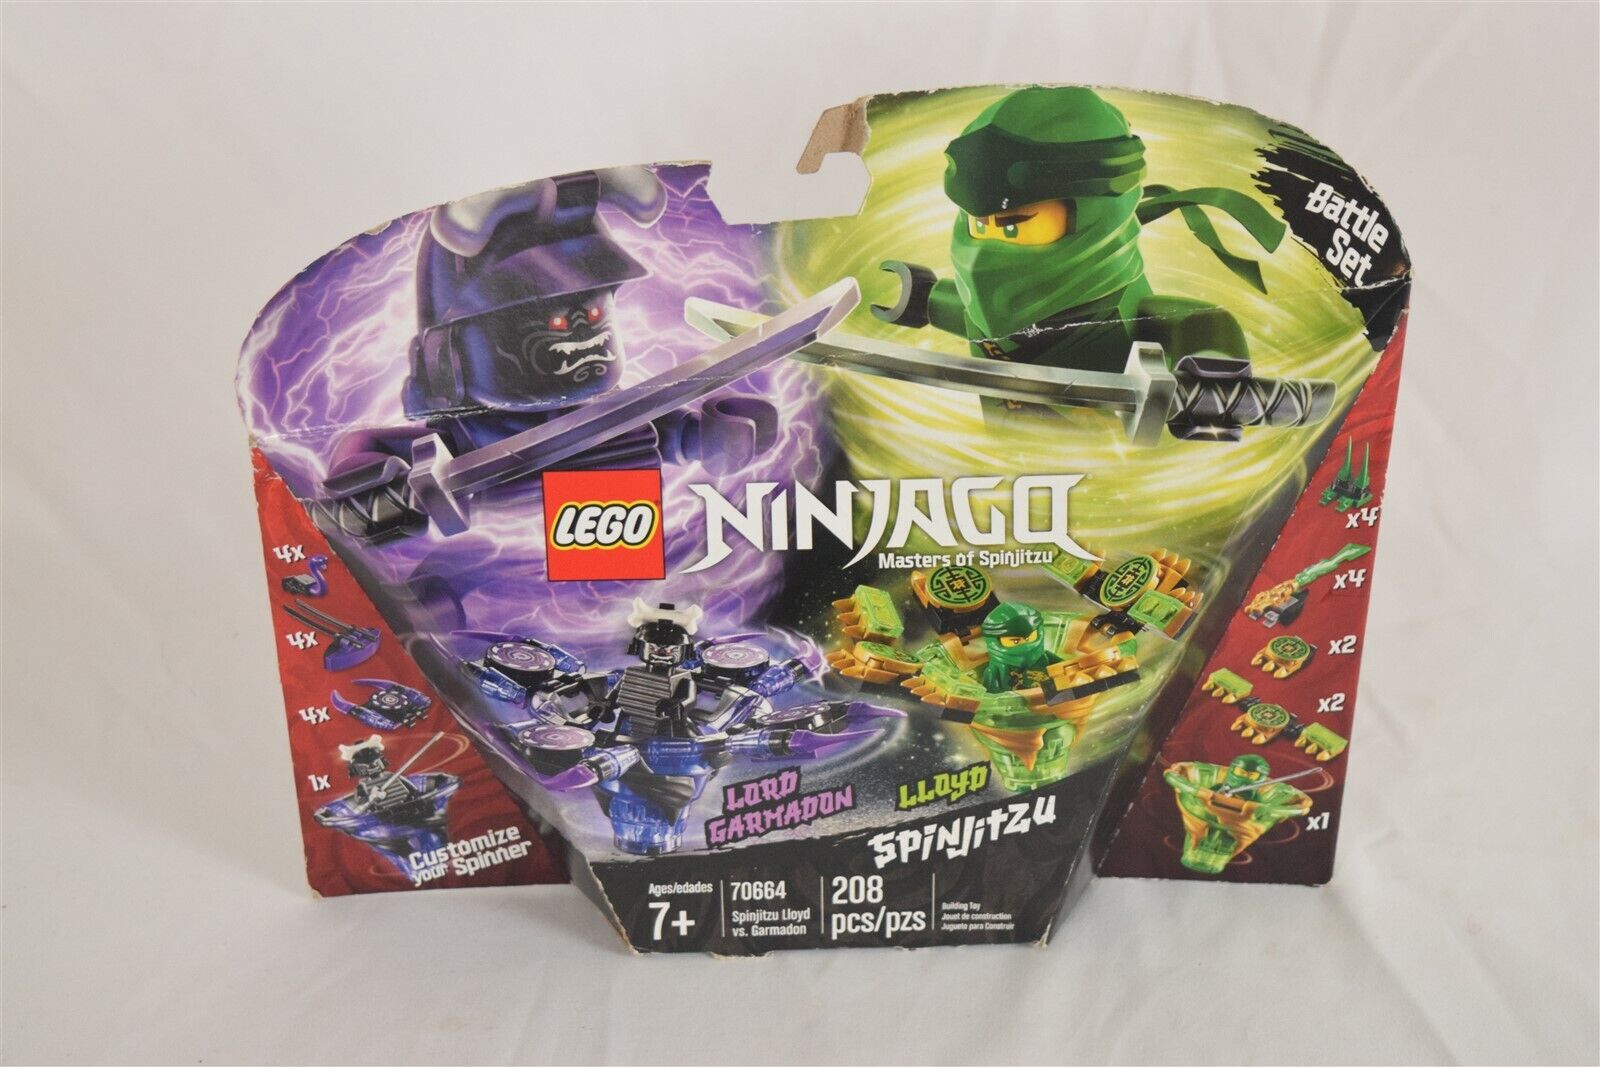 LEGO Ninjago Masters of Spinjitzu 70664 Lord Garmadon Lloyd 208 Pcs Figure for sale online